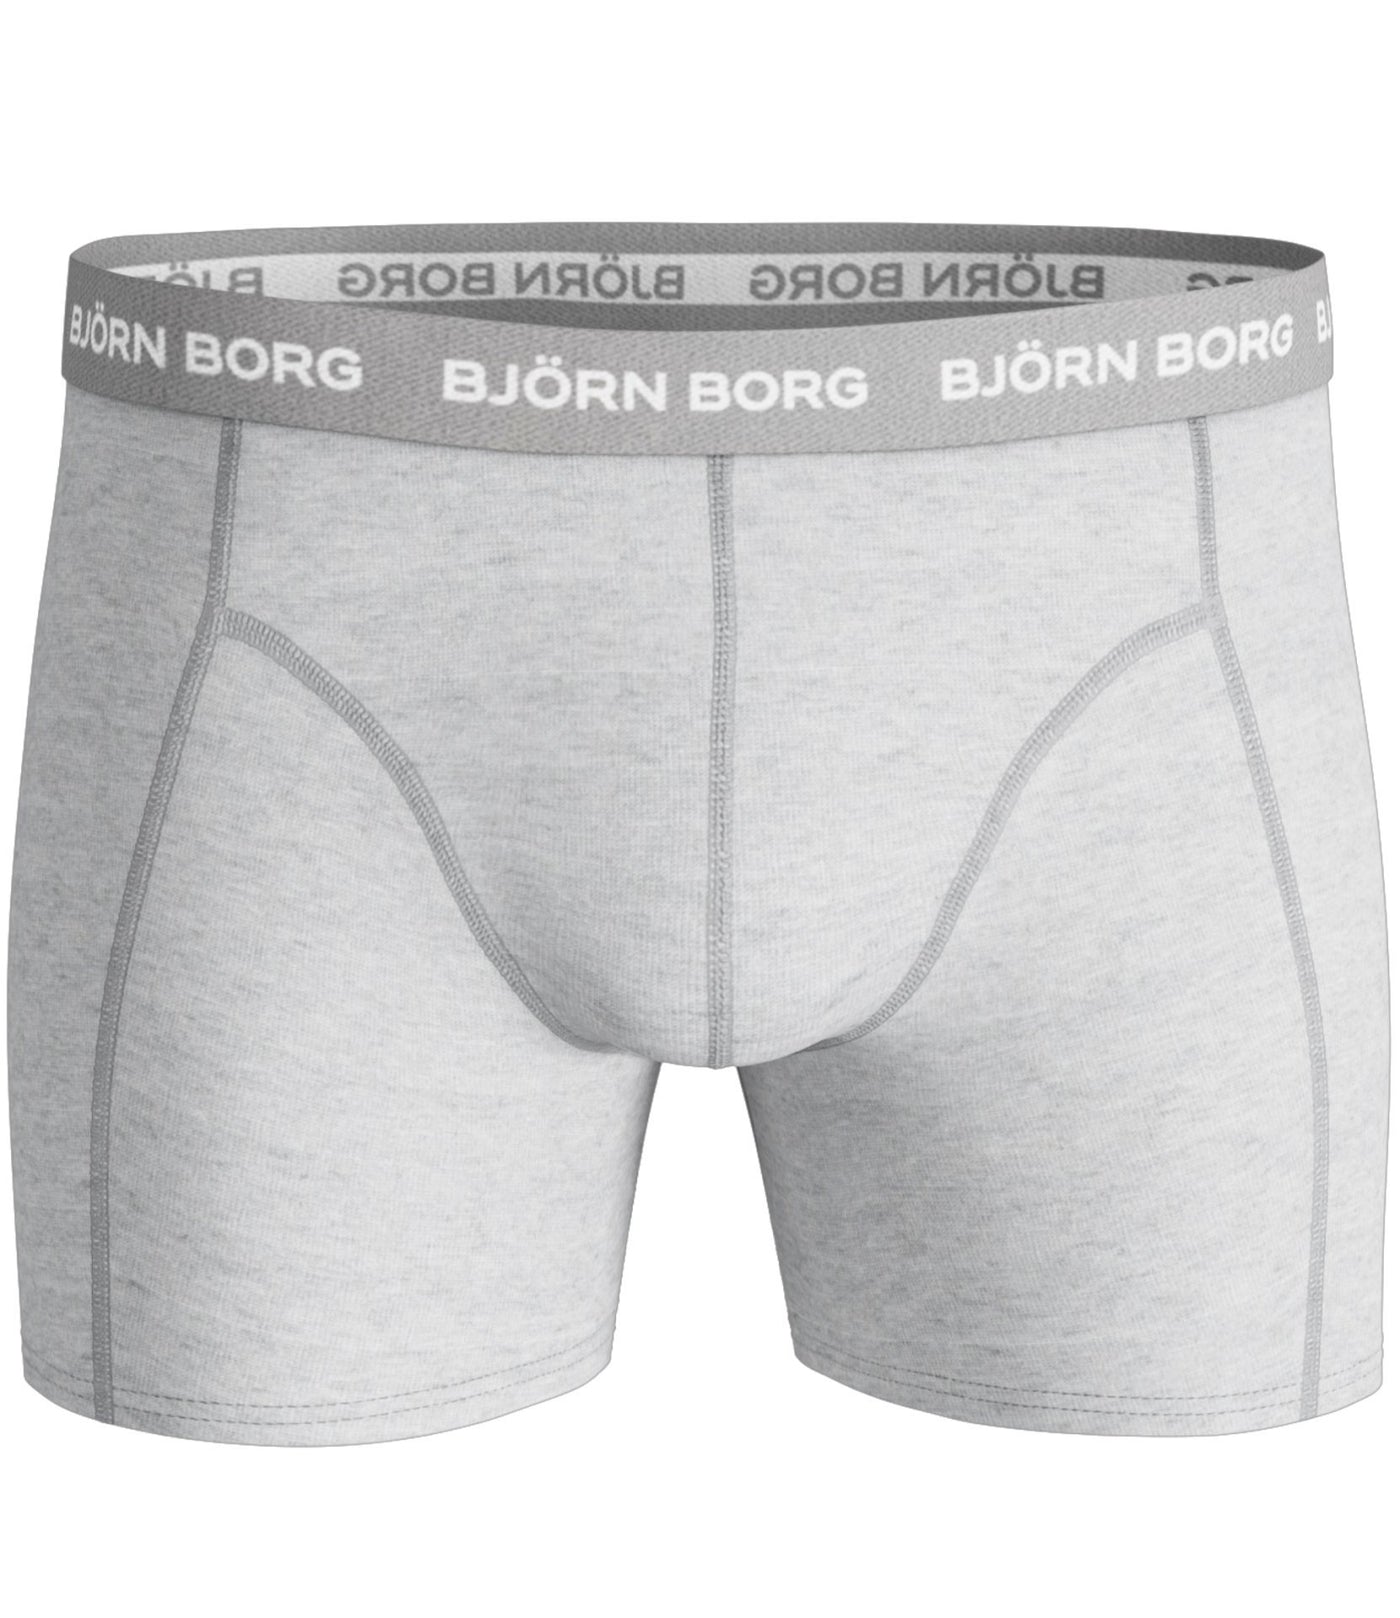 BJORN BORG x3 Pack Multipack Shadeline Boxer Shorts Mens Underwear Black White Camouflage Camo - Activemen Clothing